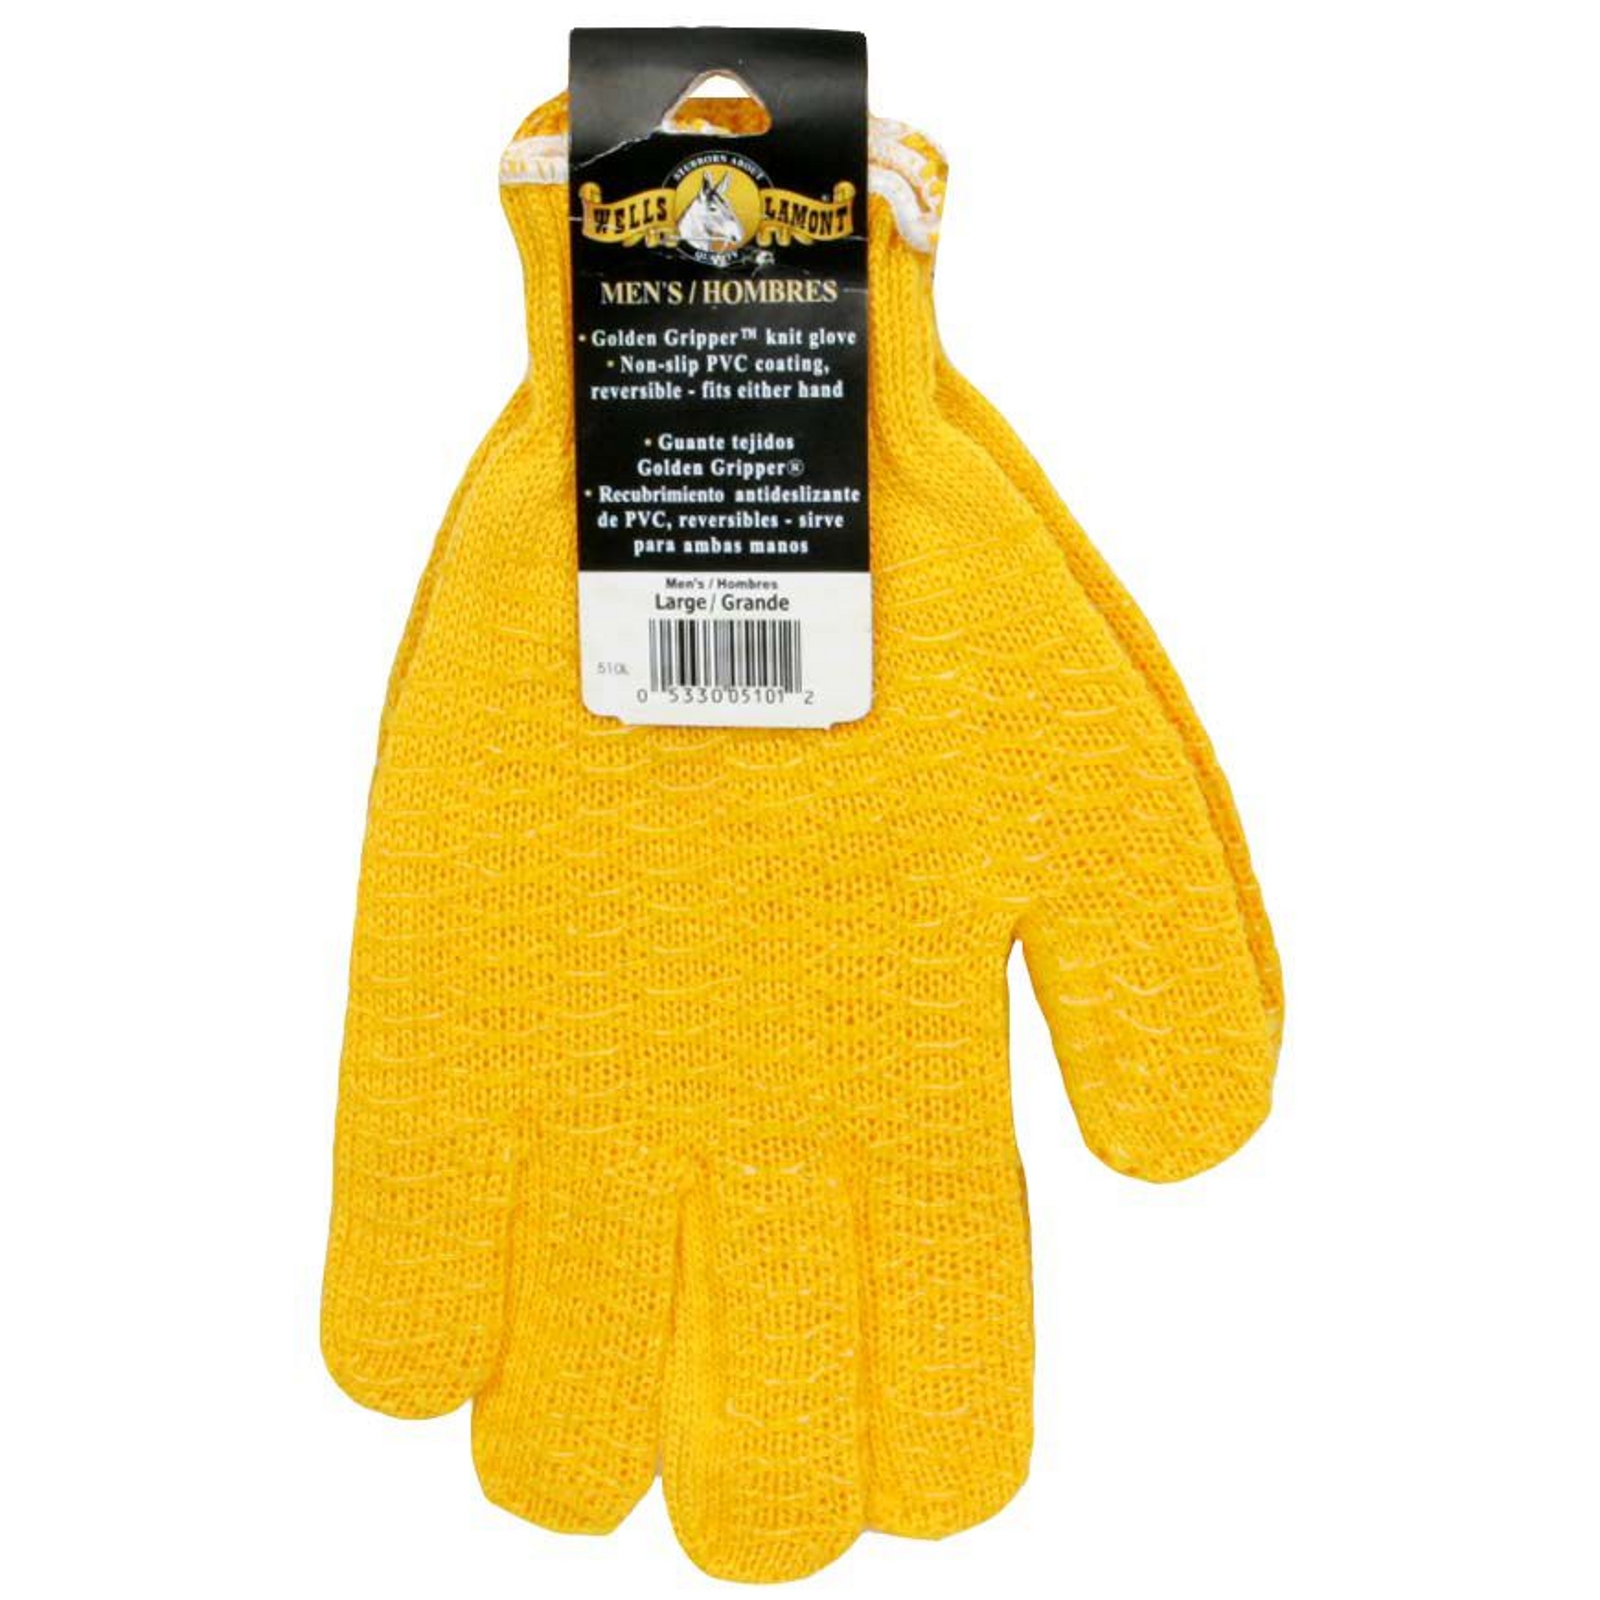 Wells Lamont 510L Golden Gripper Knit Gloves, Men's, Large, 1 pair